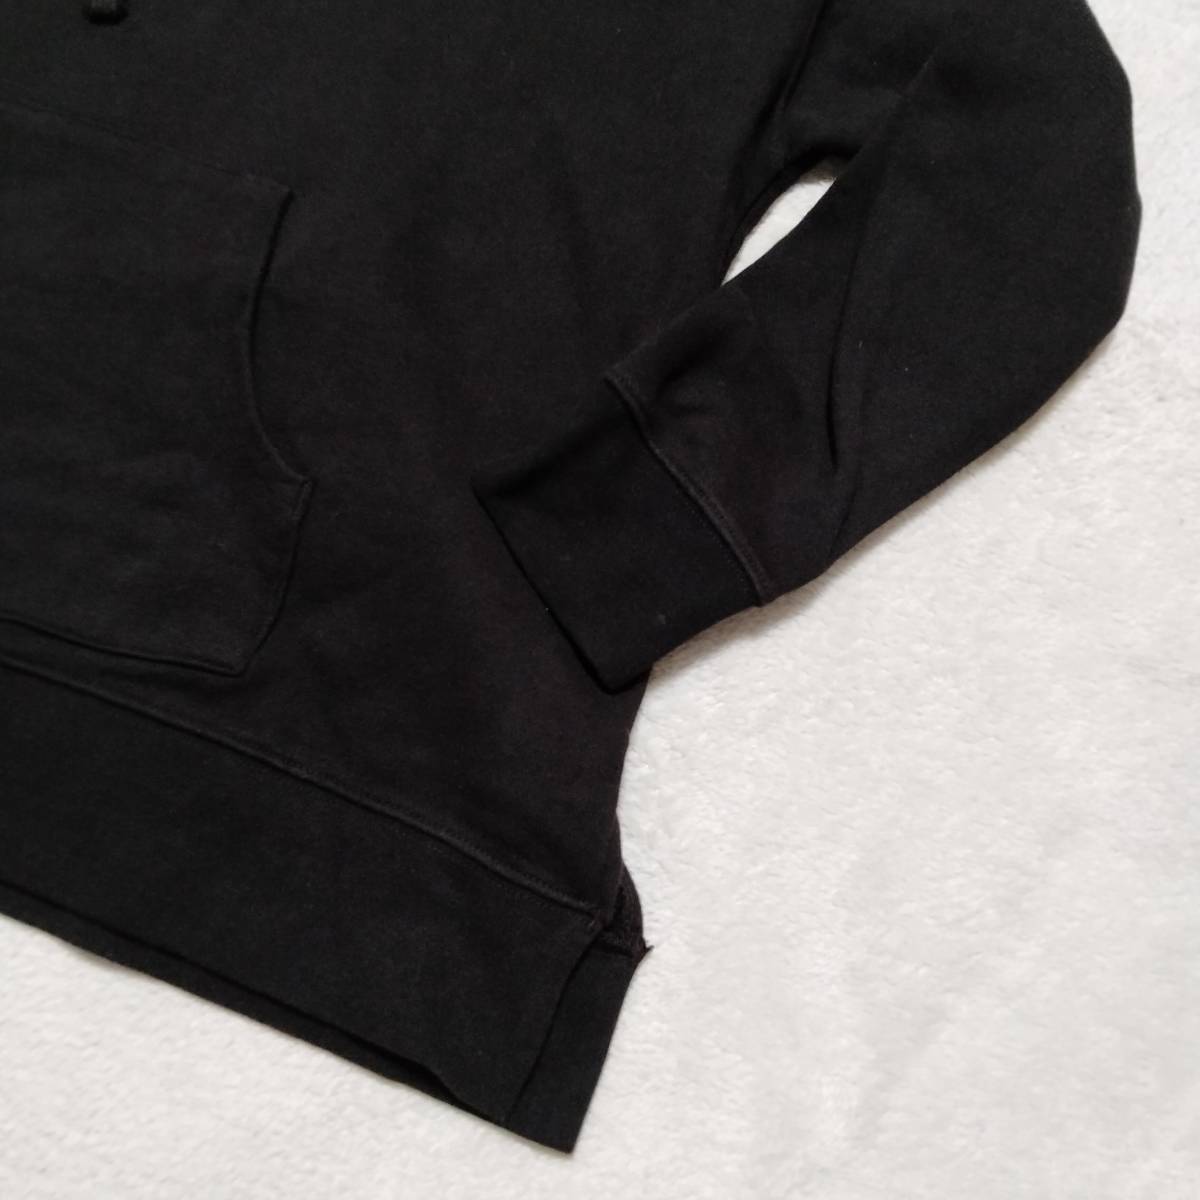 Lee Lee brand Logo f-ti- Parker tops plain long sleeve kangaroo pocket hood cotton 100% black size M SA181